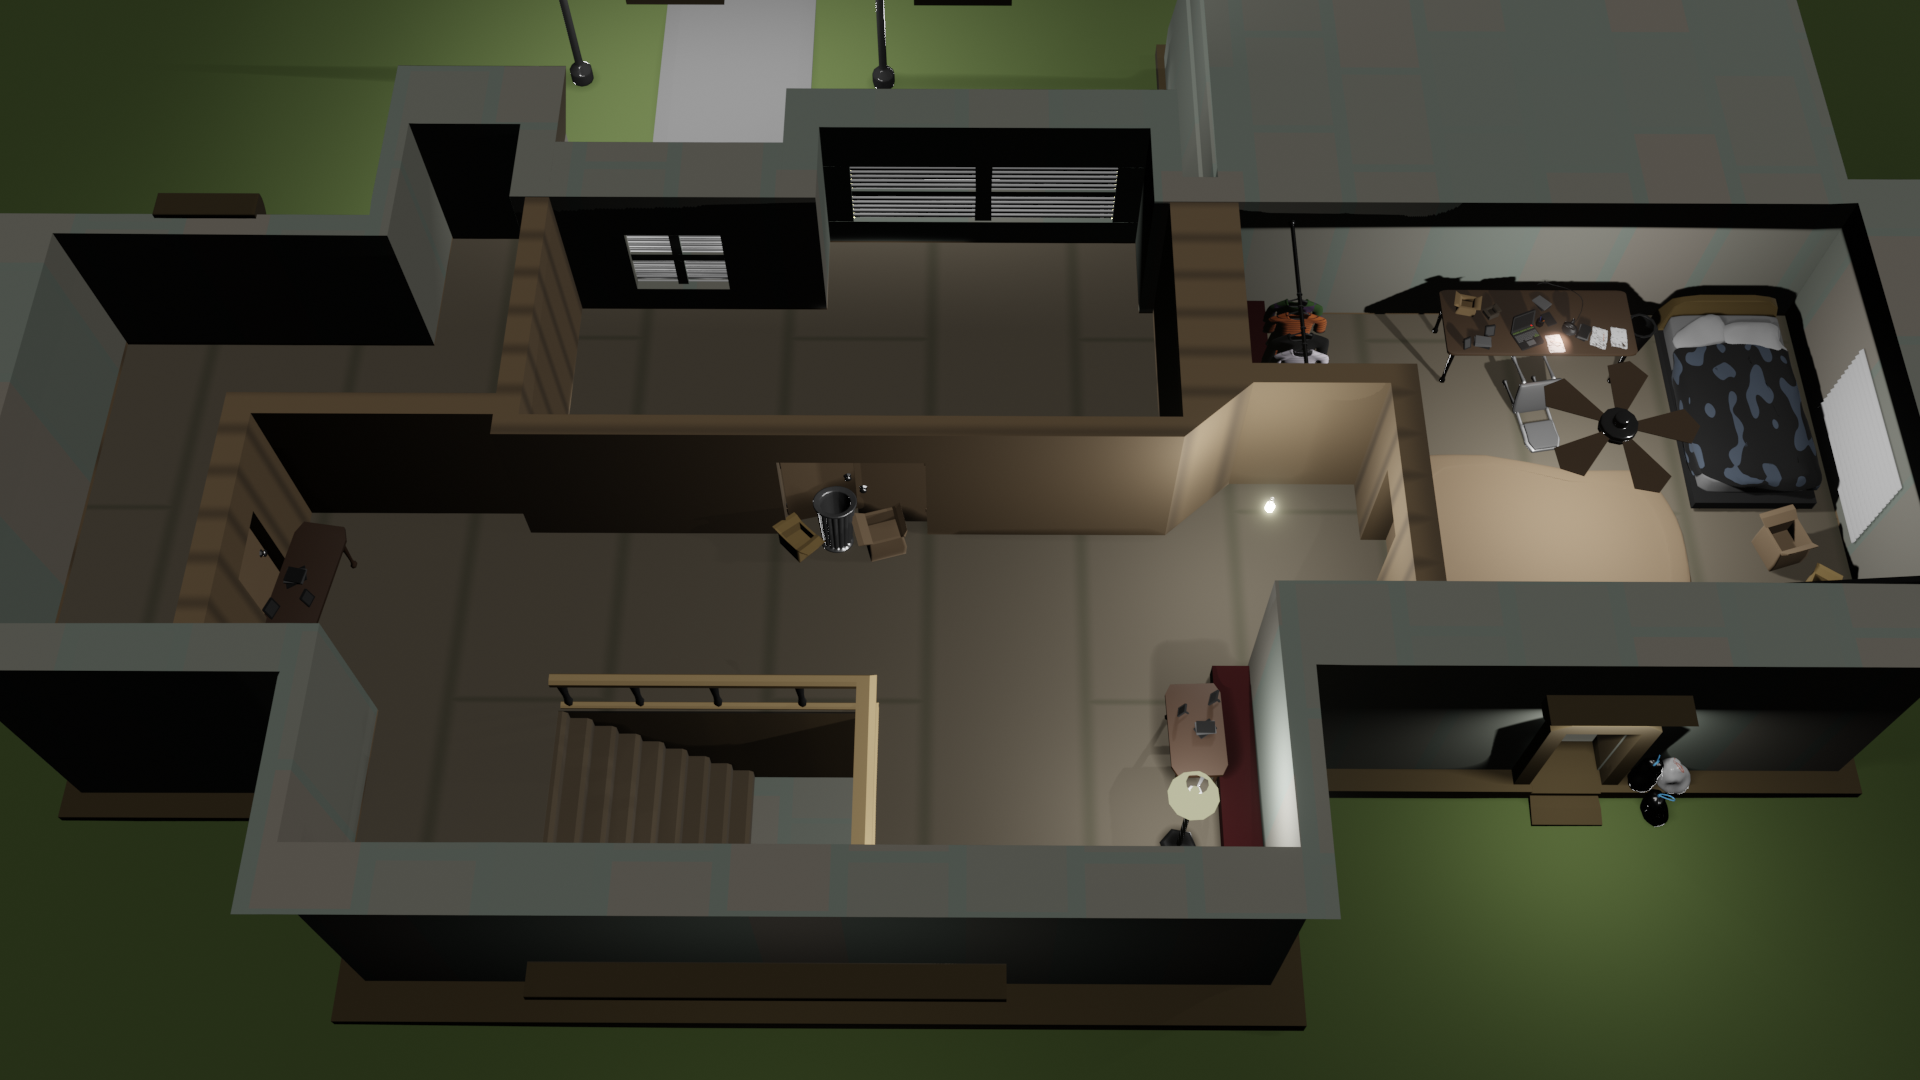 2-Floor Modular/Customizable House preview image 2